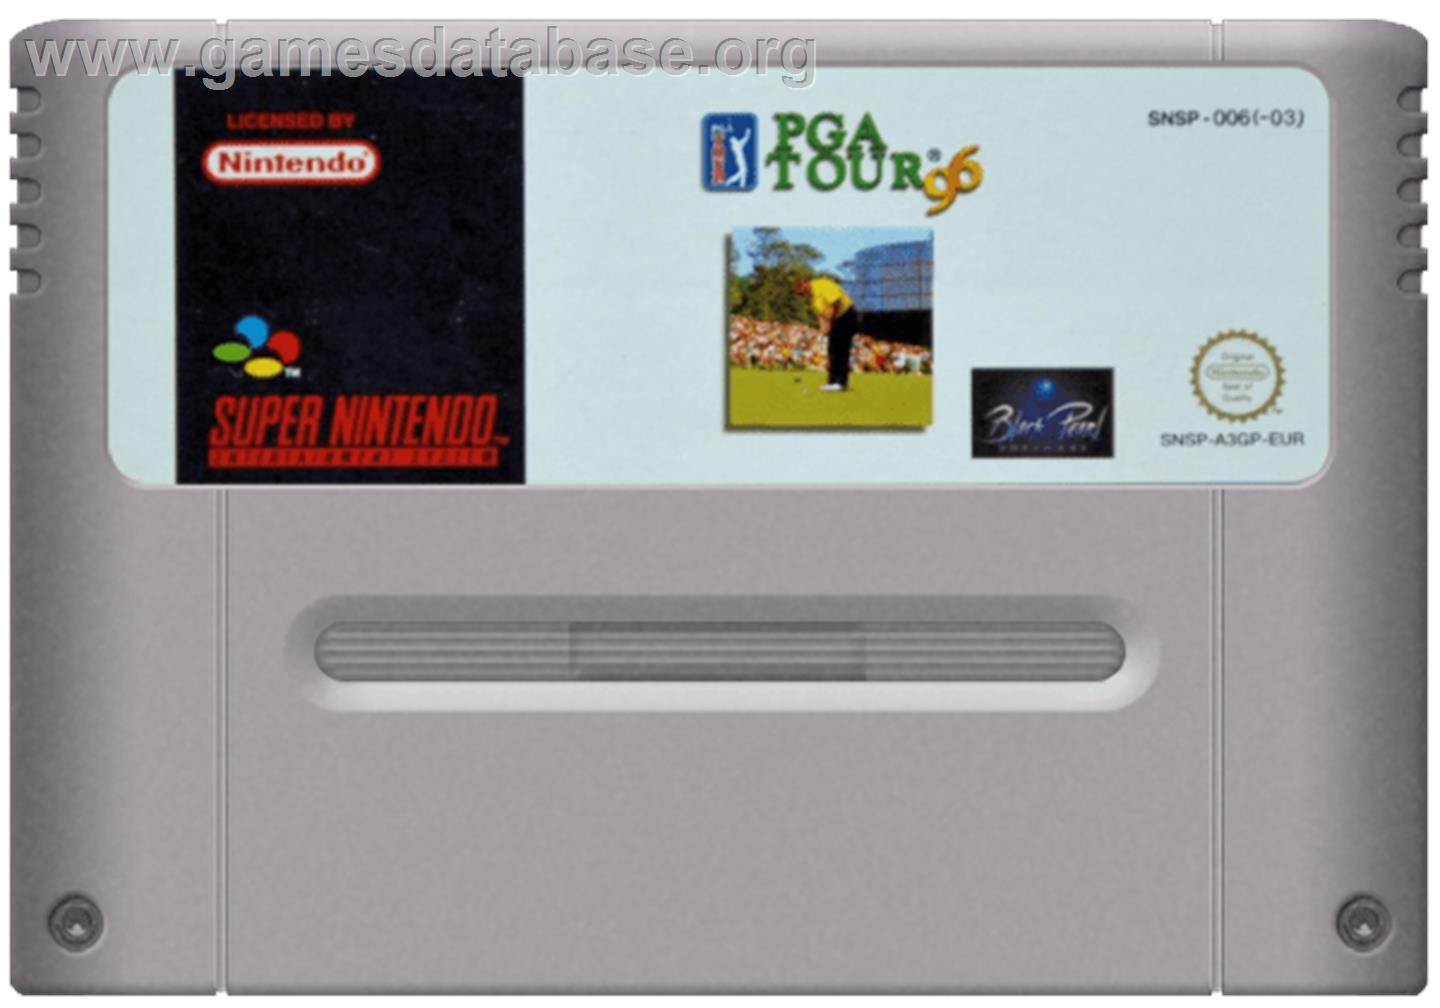 PGA Tour '96 - Nintendo SNES - Artwork - Cartridge